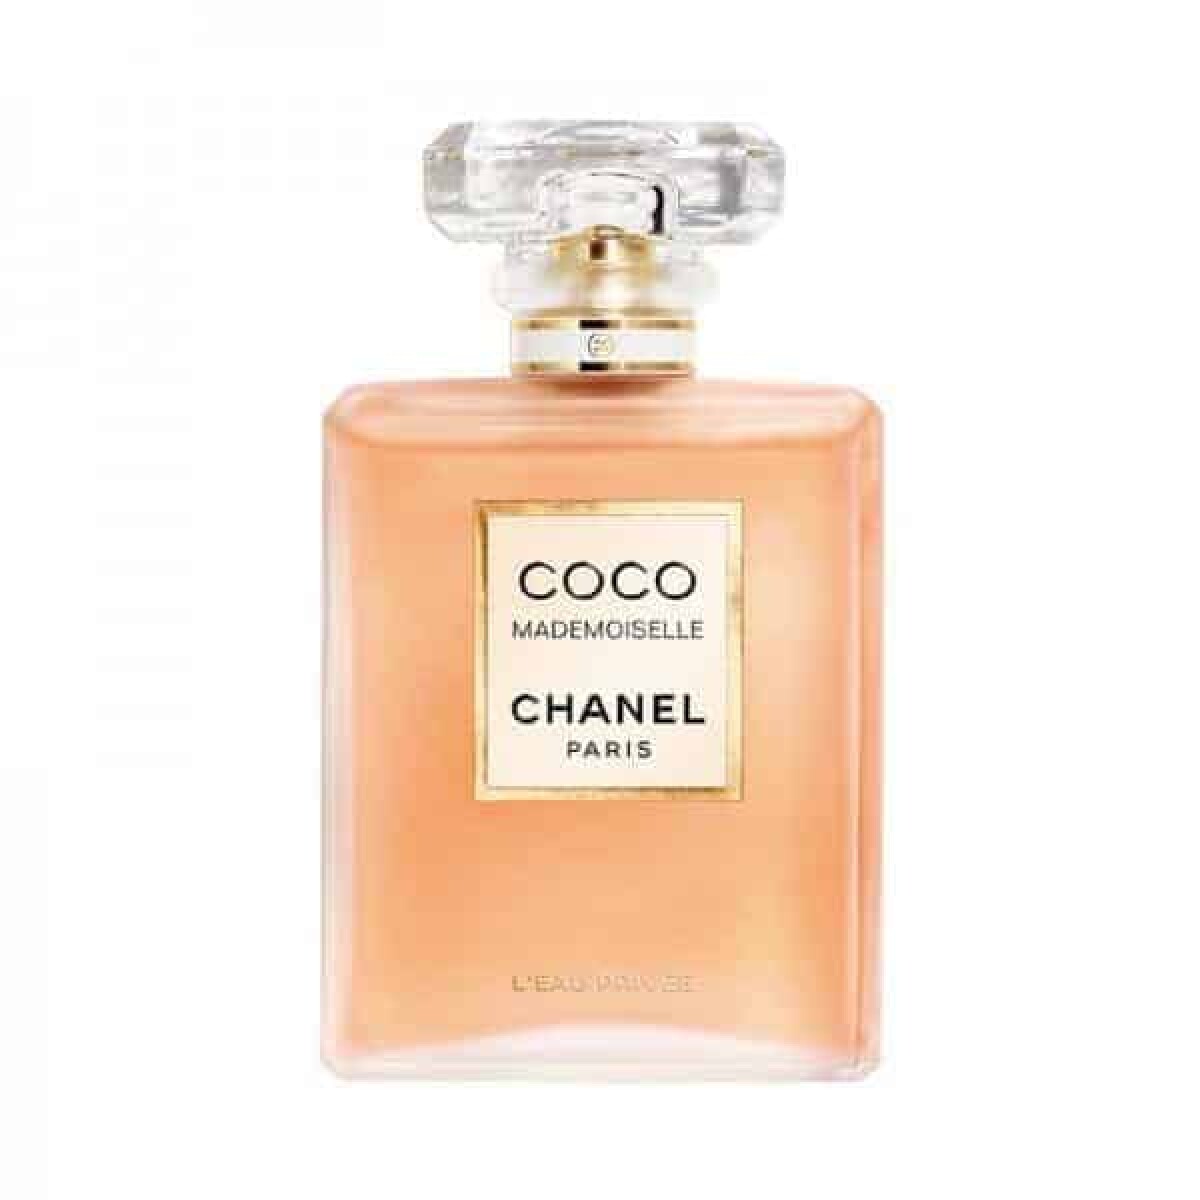 Perfume Chanel Coco Medemoiselle Edt L'Eau Privee 100ml 